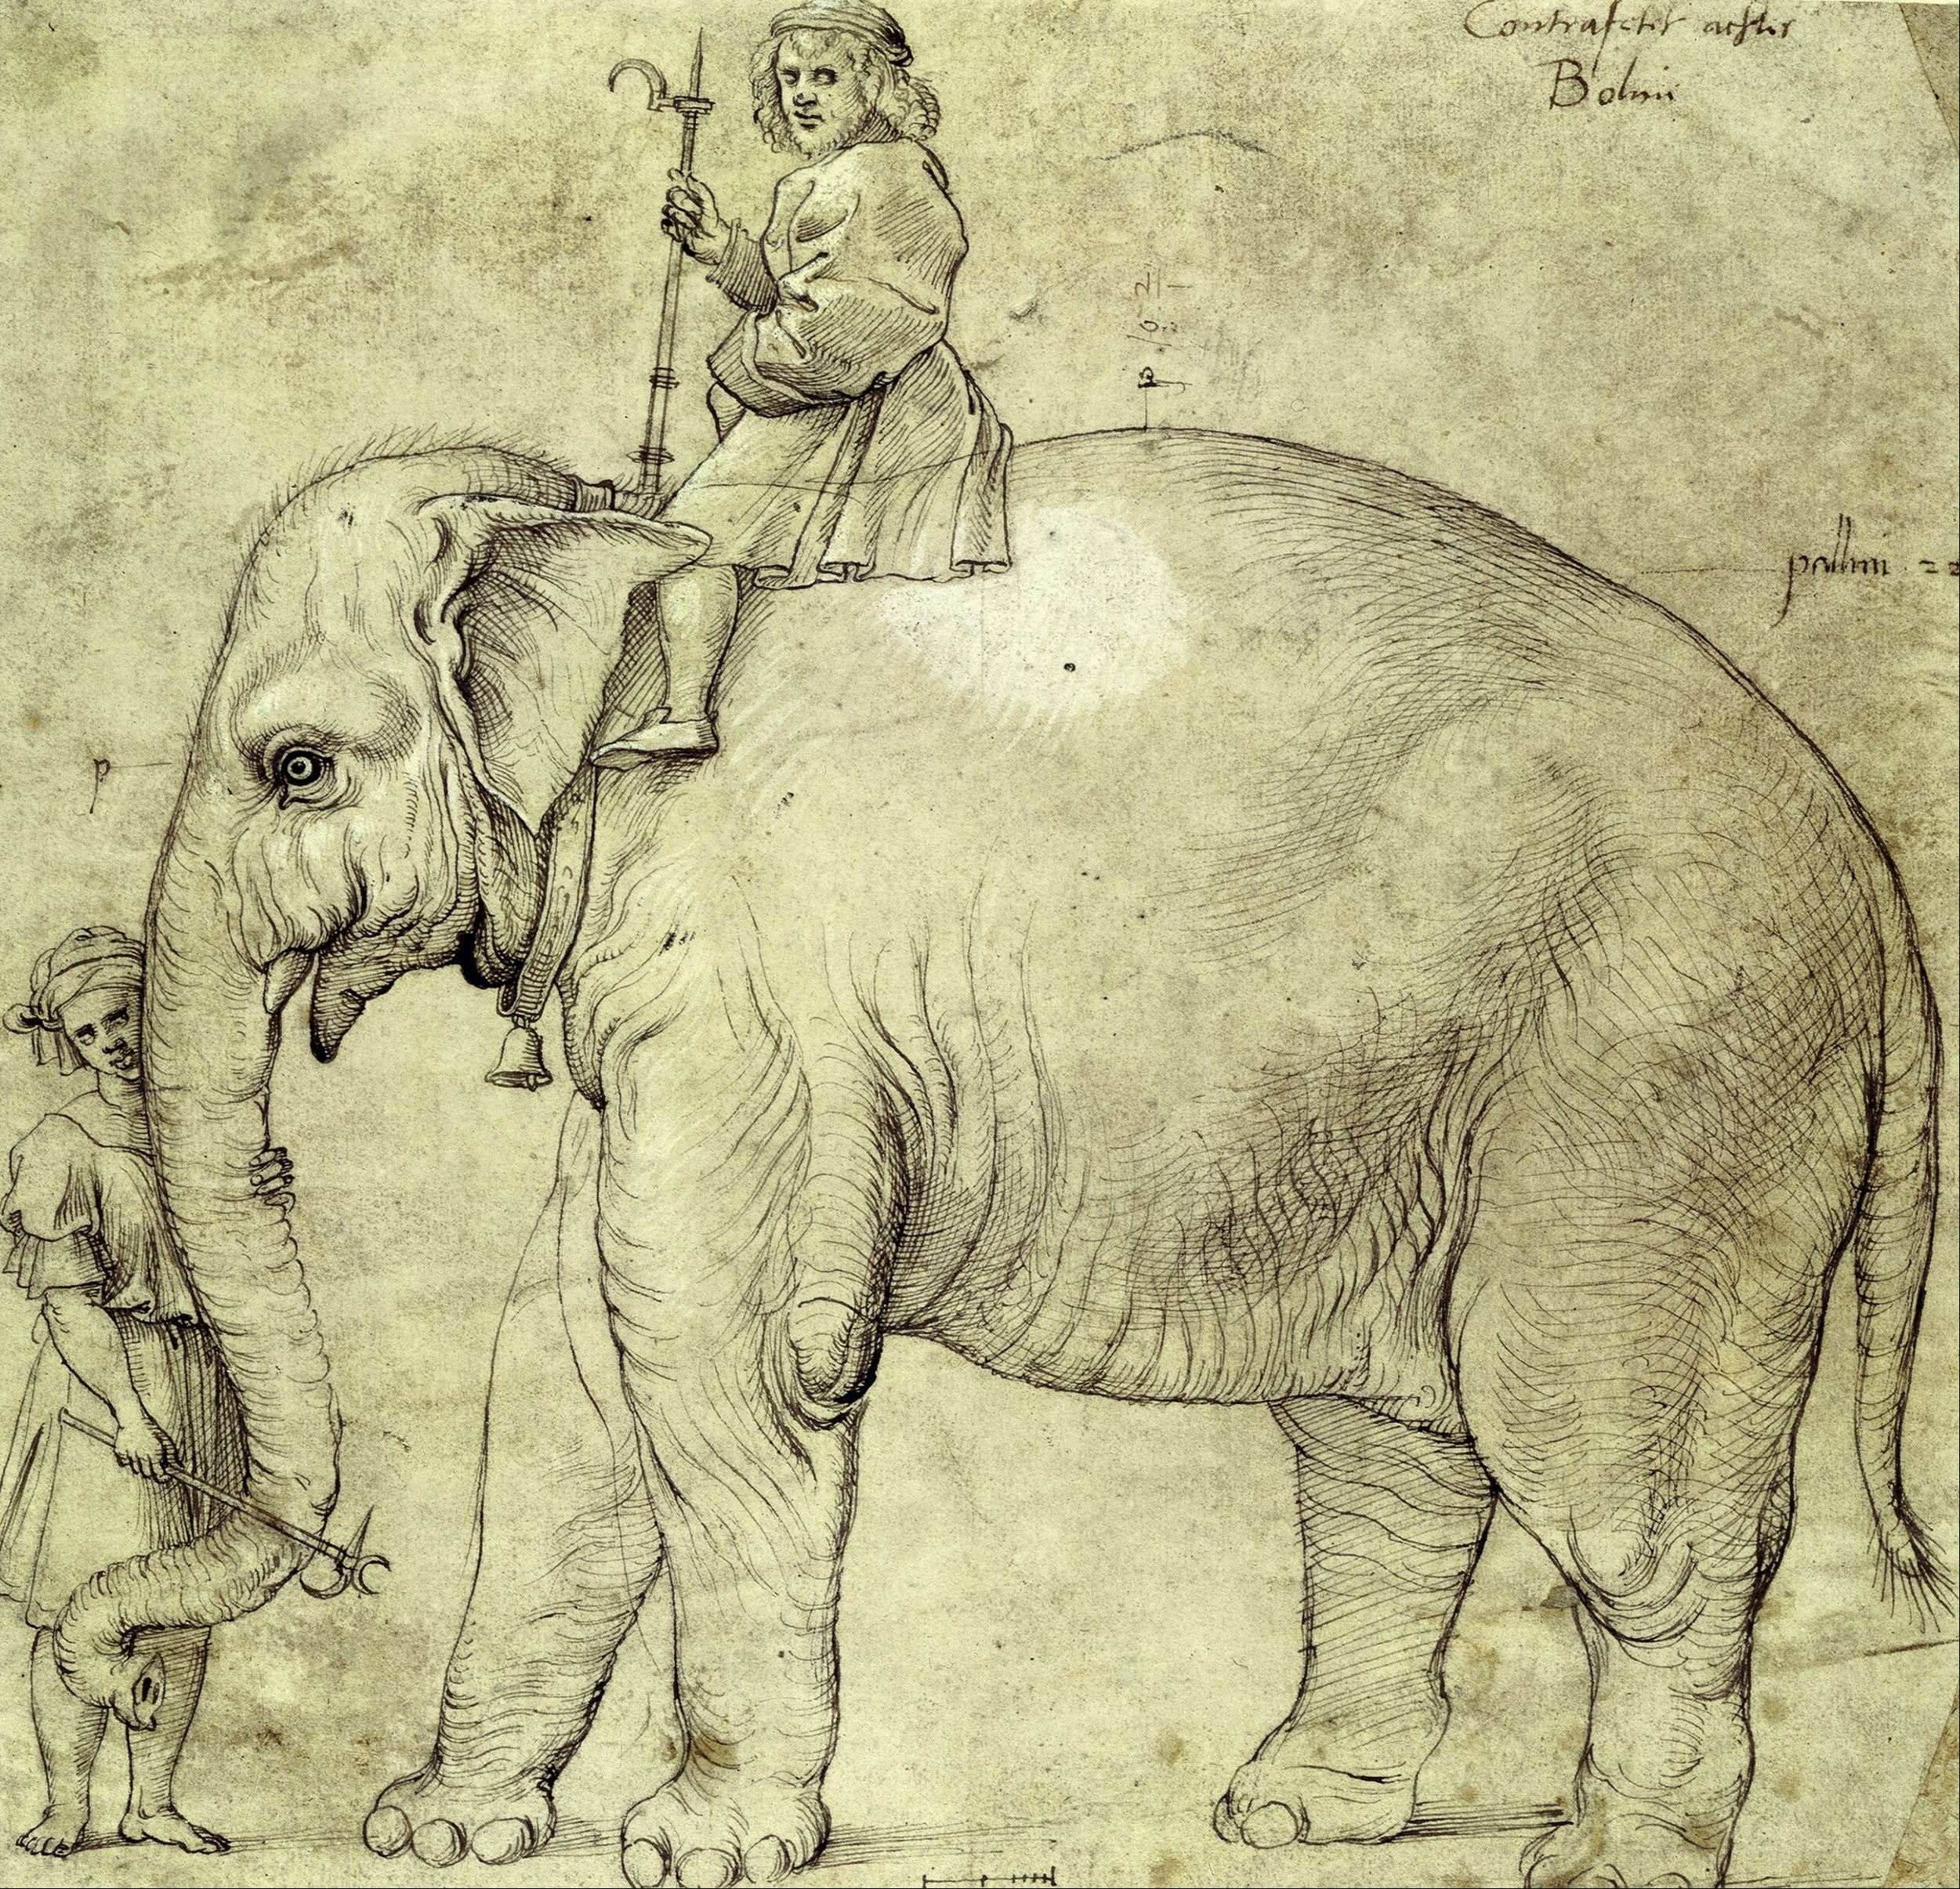 The Elephant Hanno by The School of Raphael Sanzio - 1516 - 28.5 x 27.9 cm Kupferstichkabinett, National Museums in Berlin